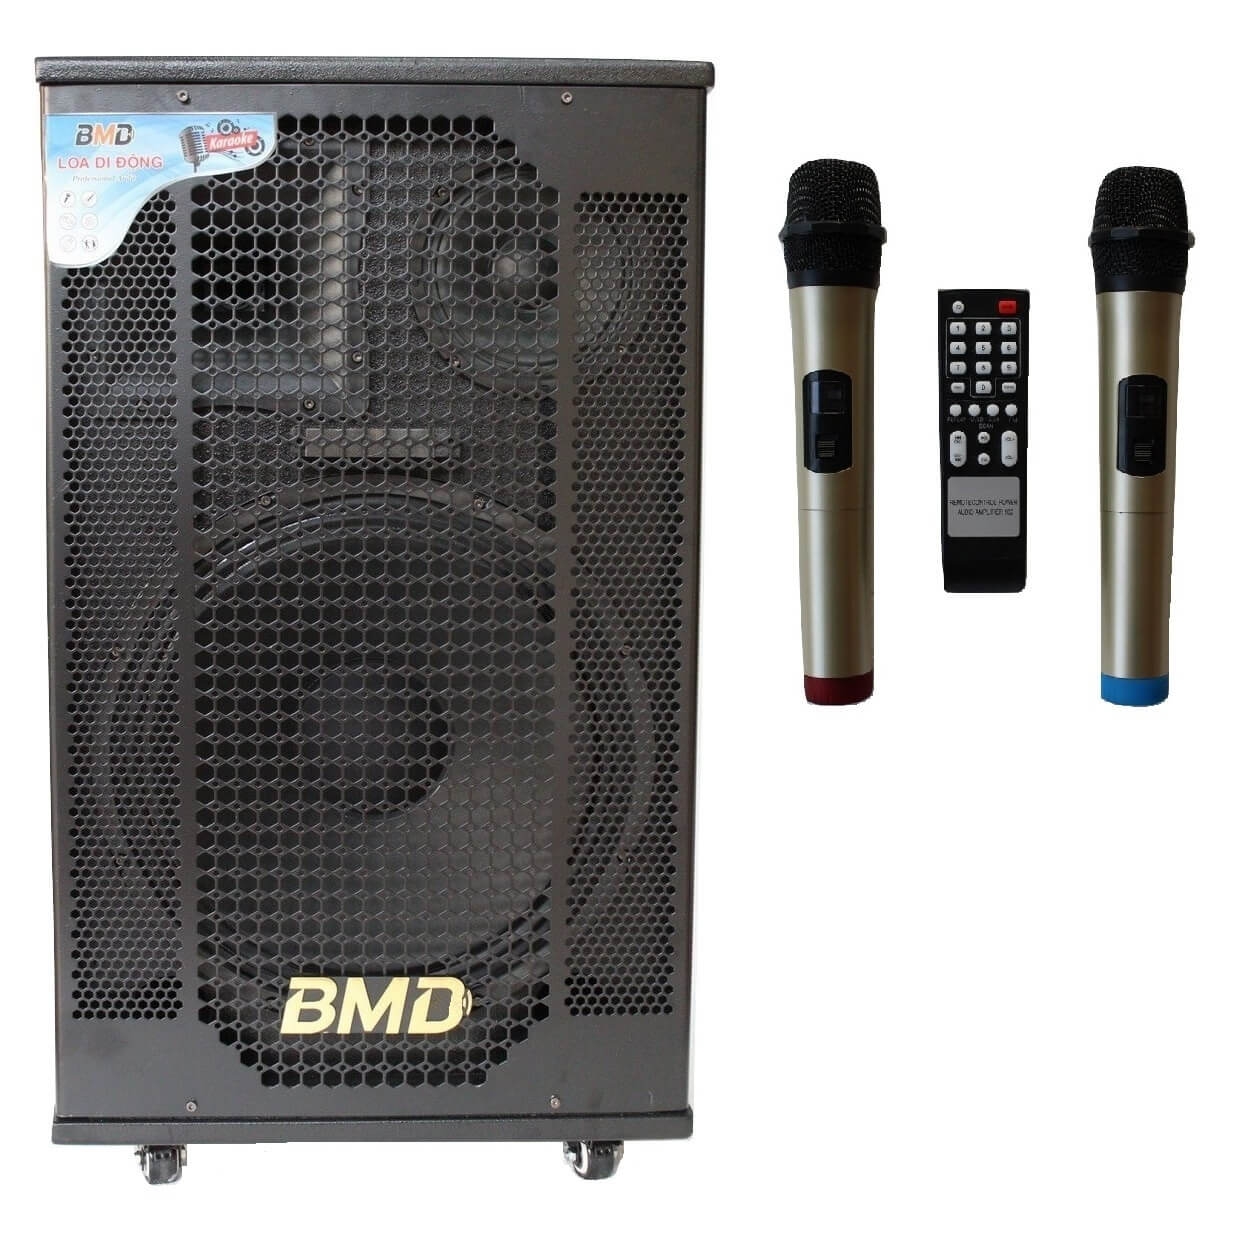 Loa Kéo Di Động Karaoke Bass 40 BMD LK-40B60 (800W) 4 Tấc